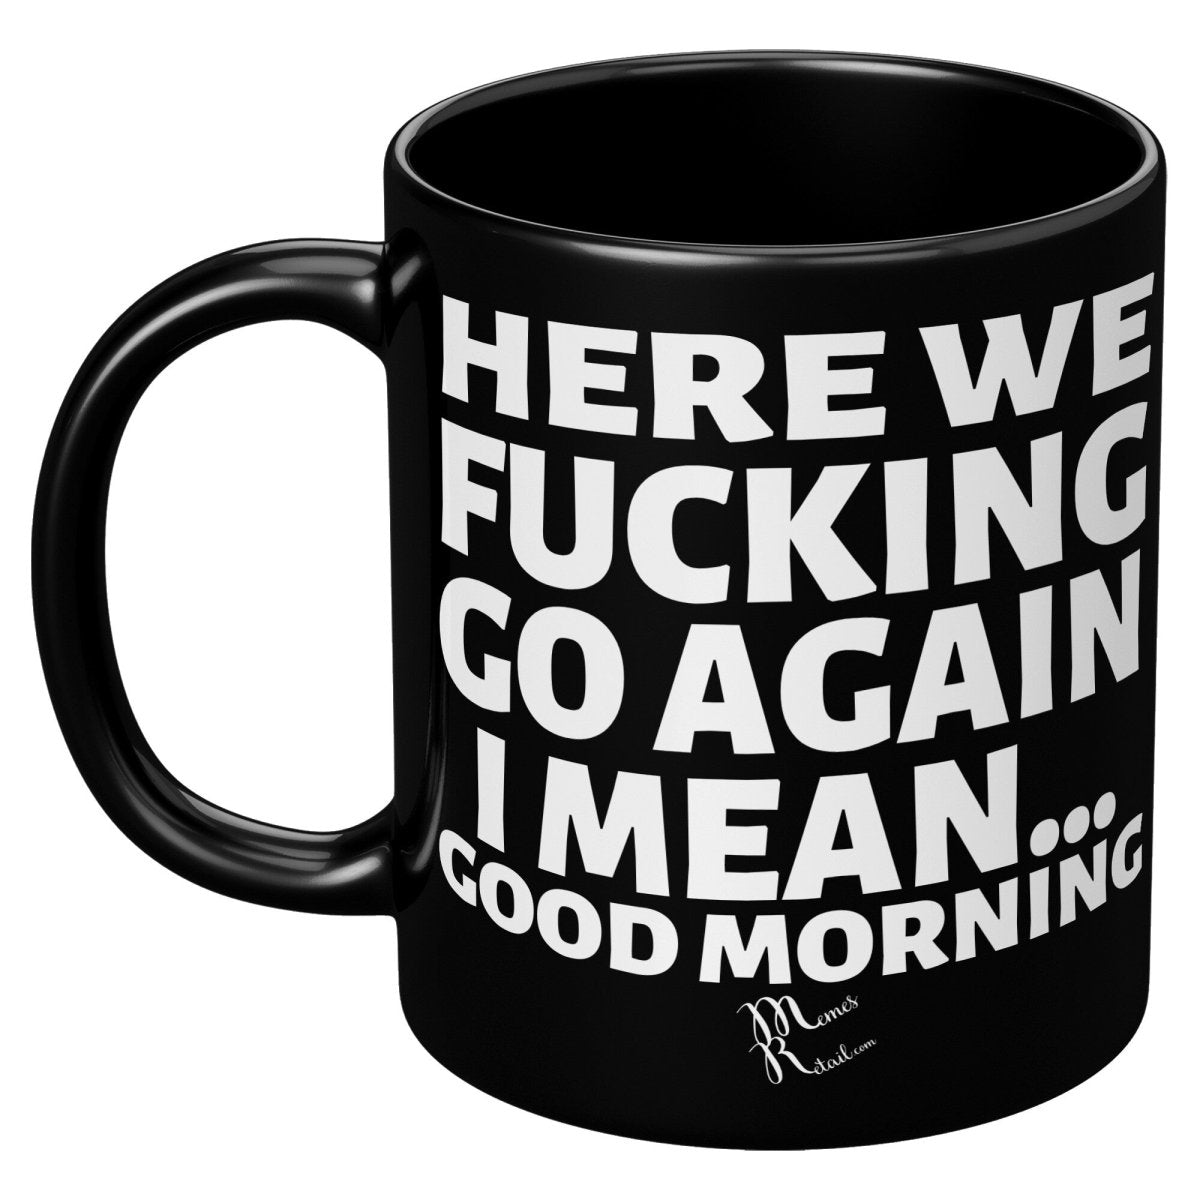 Mean Mug Coffee Mugs